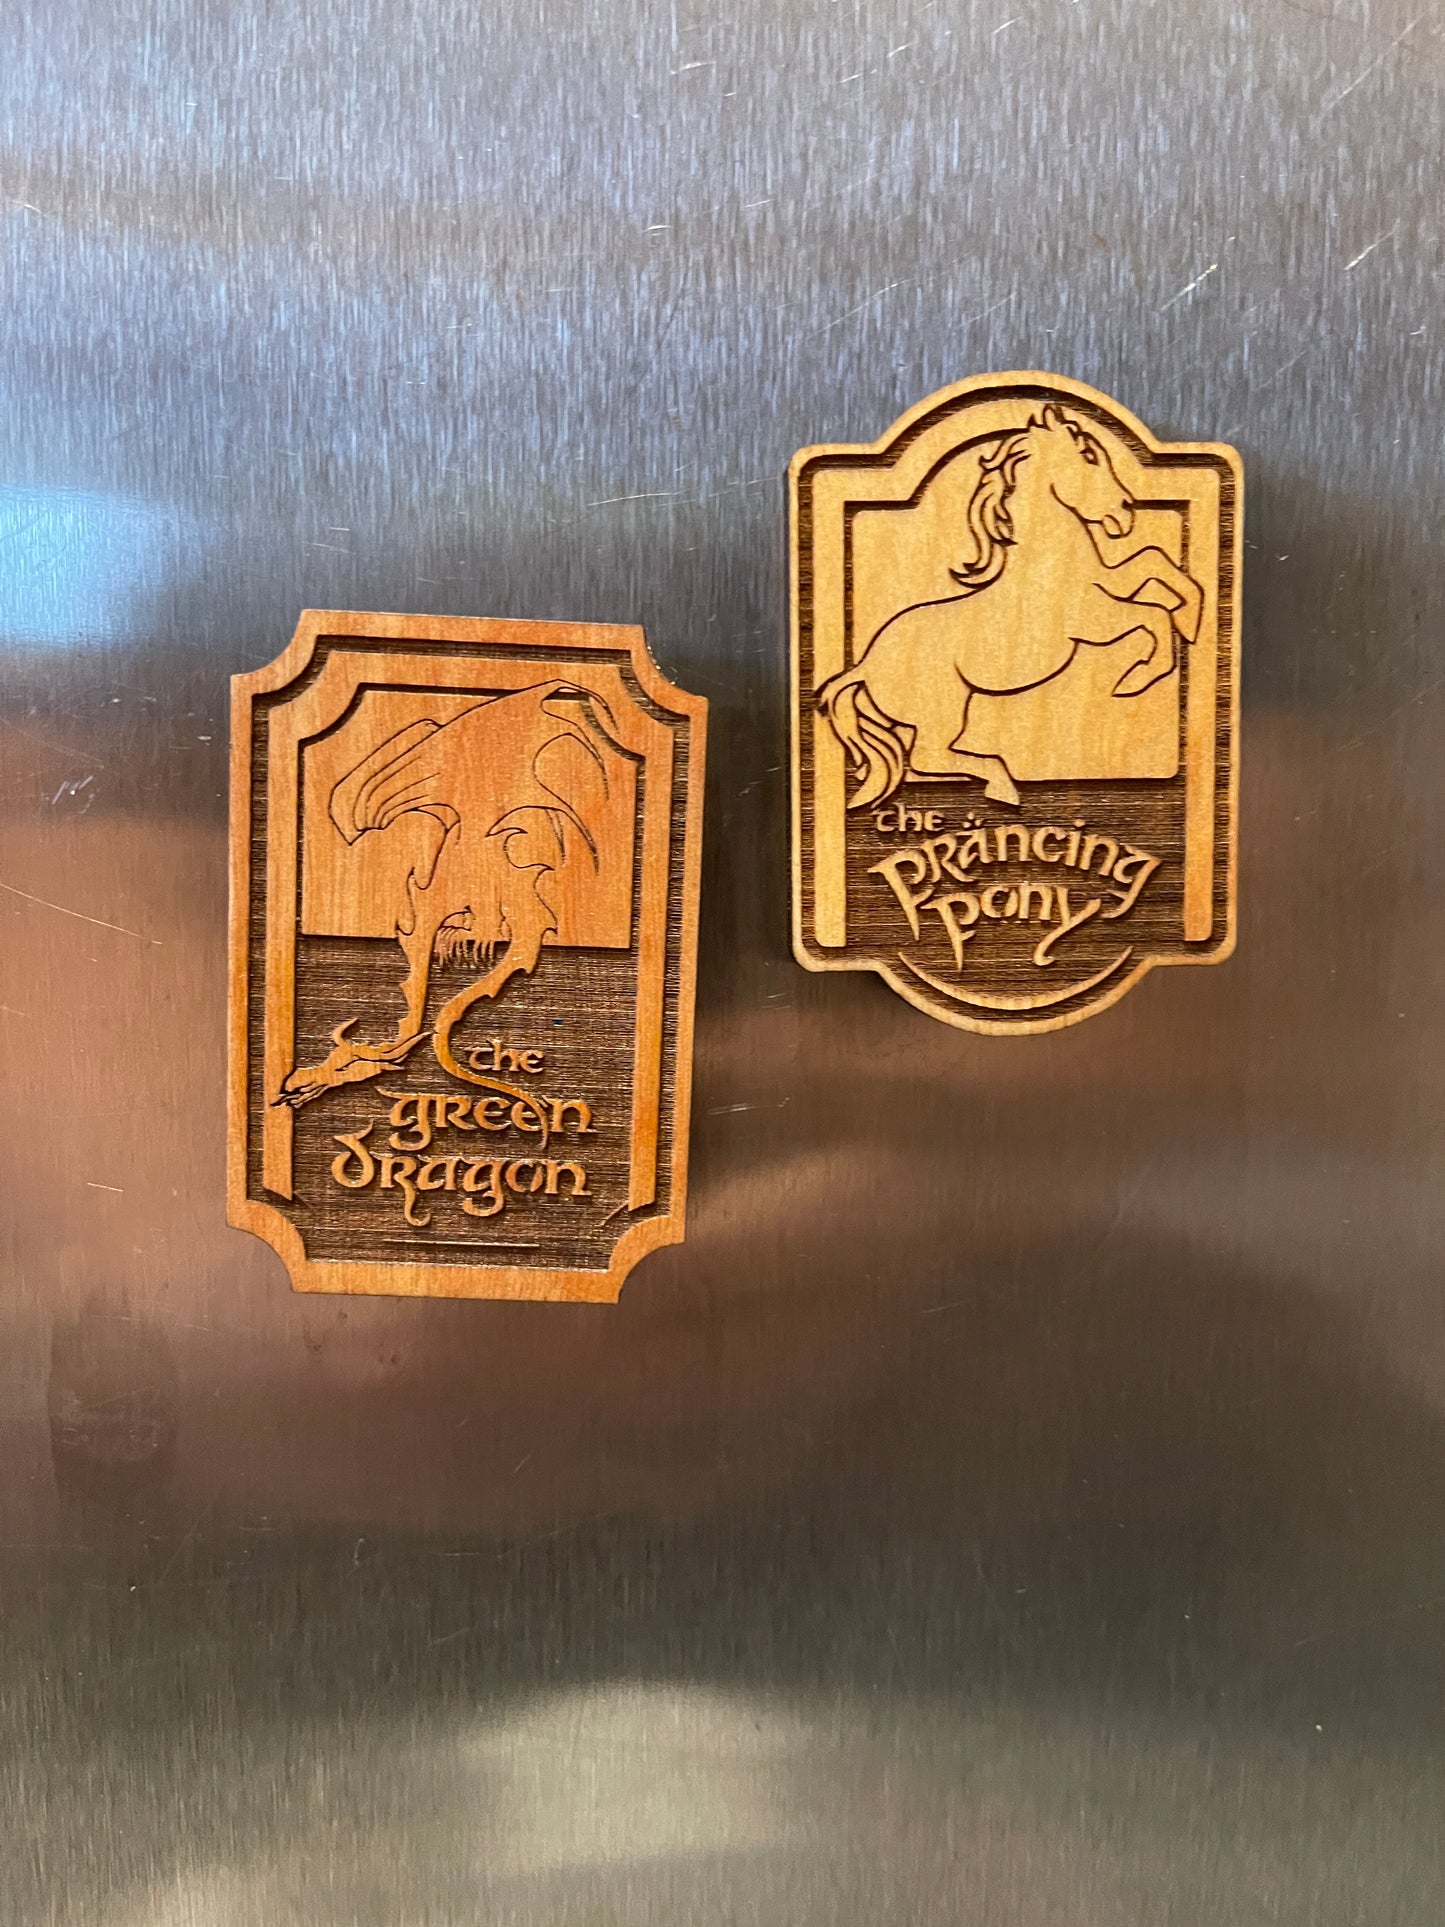 Middle Earth fridge magnets